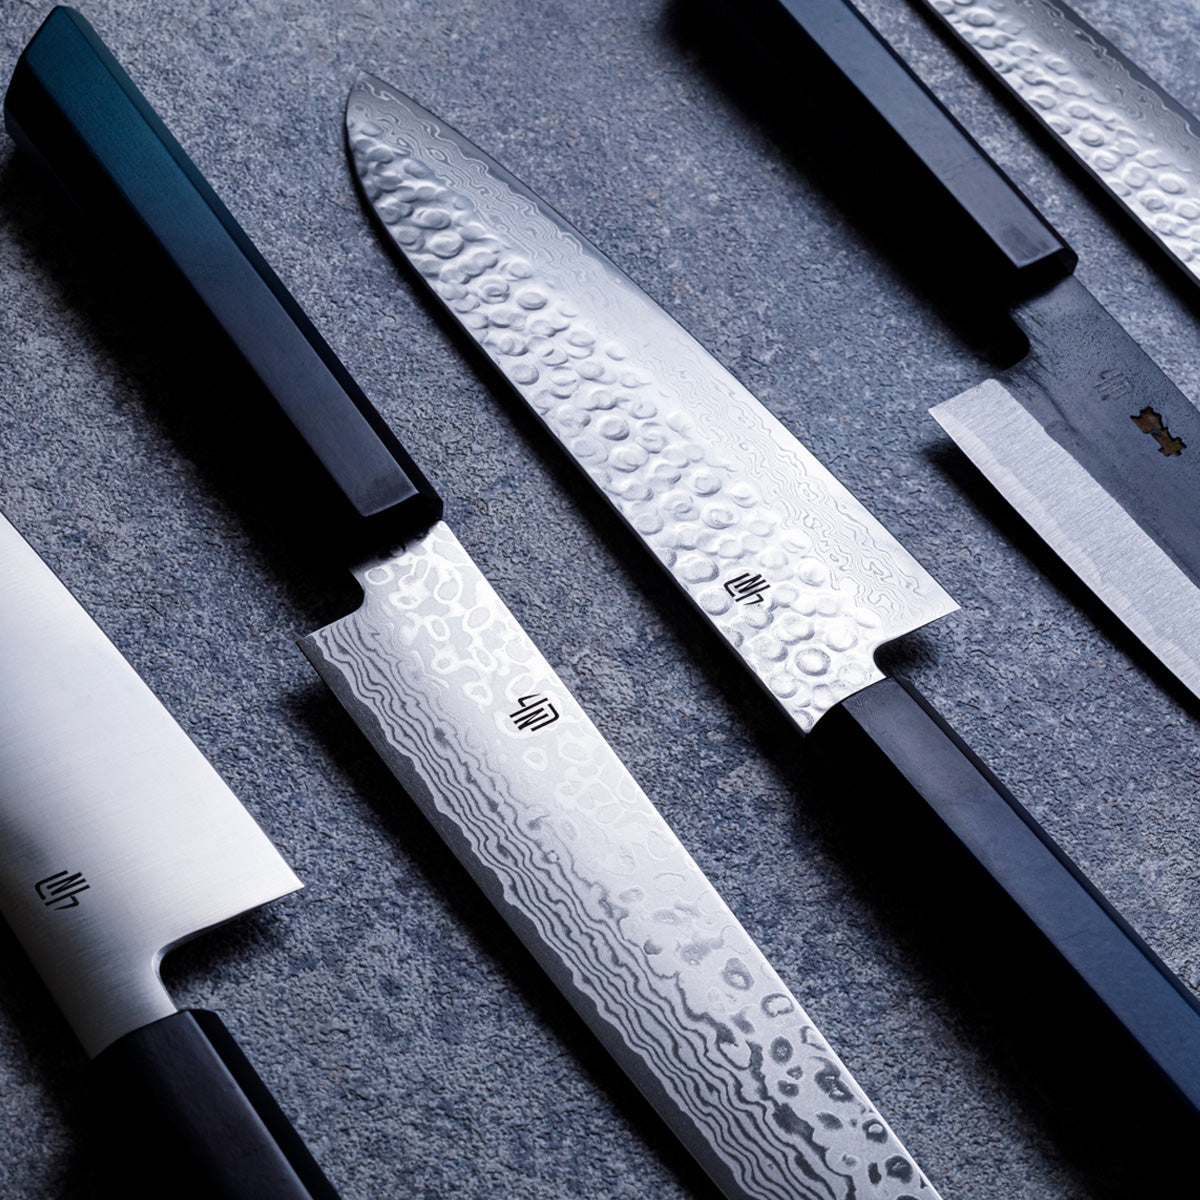 [Ai knife] New beef knife 24cm